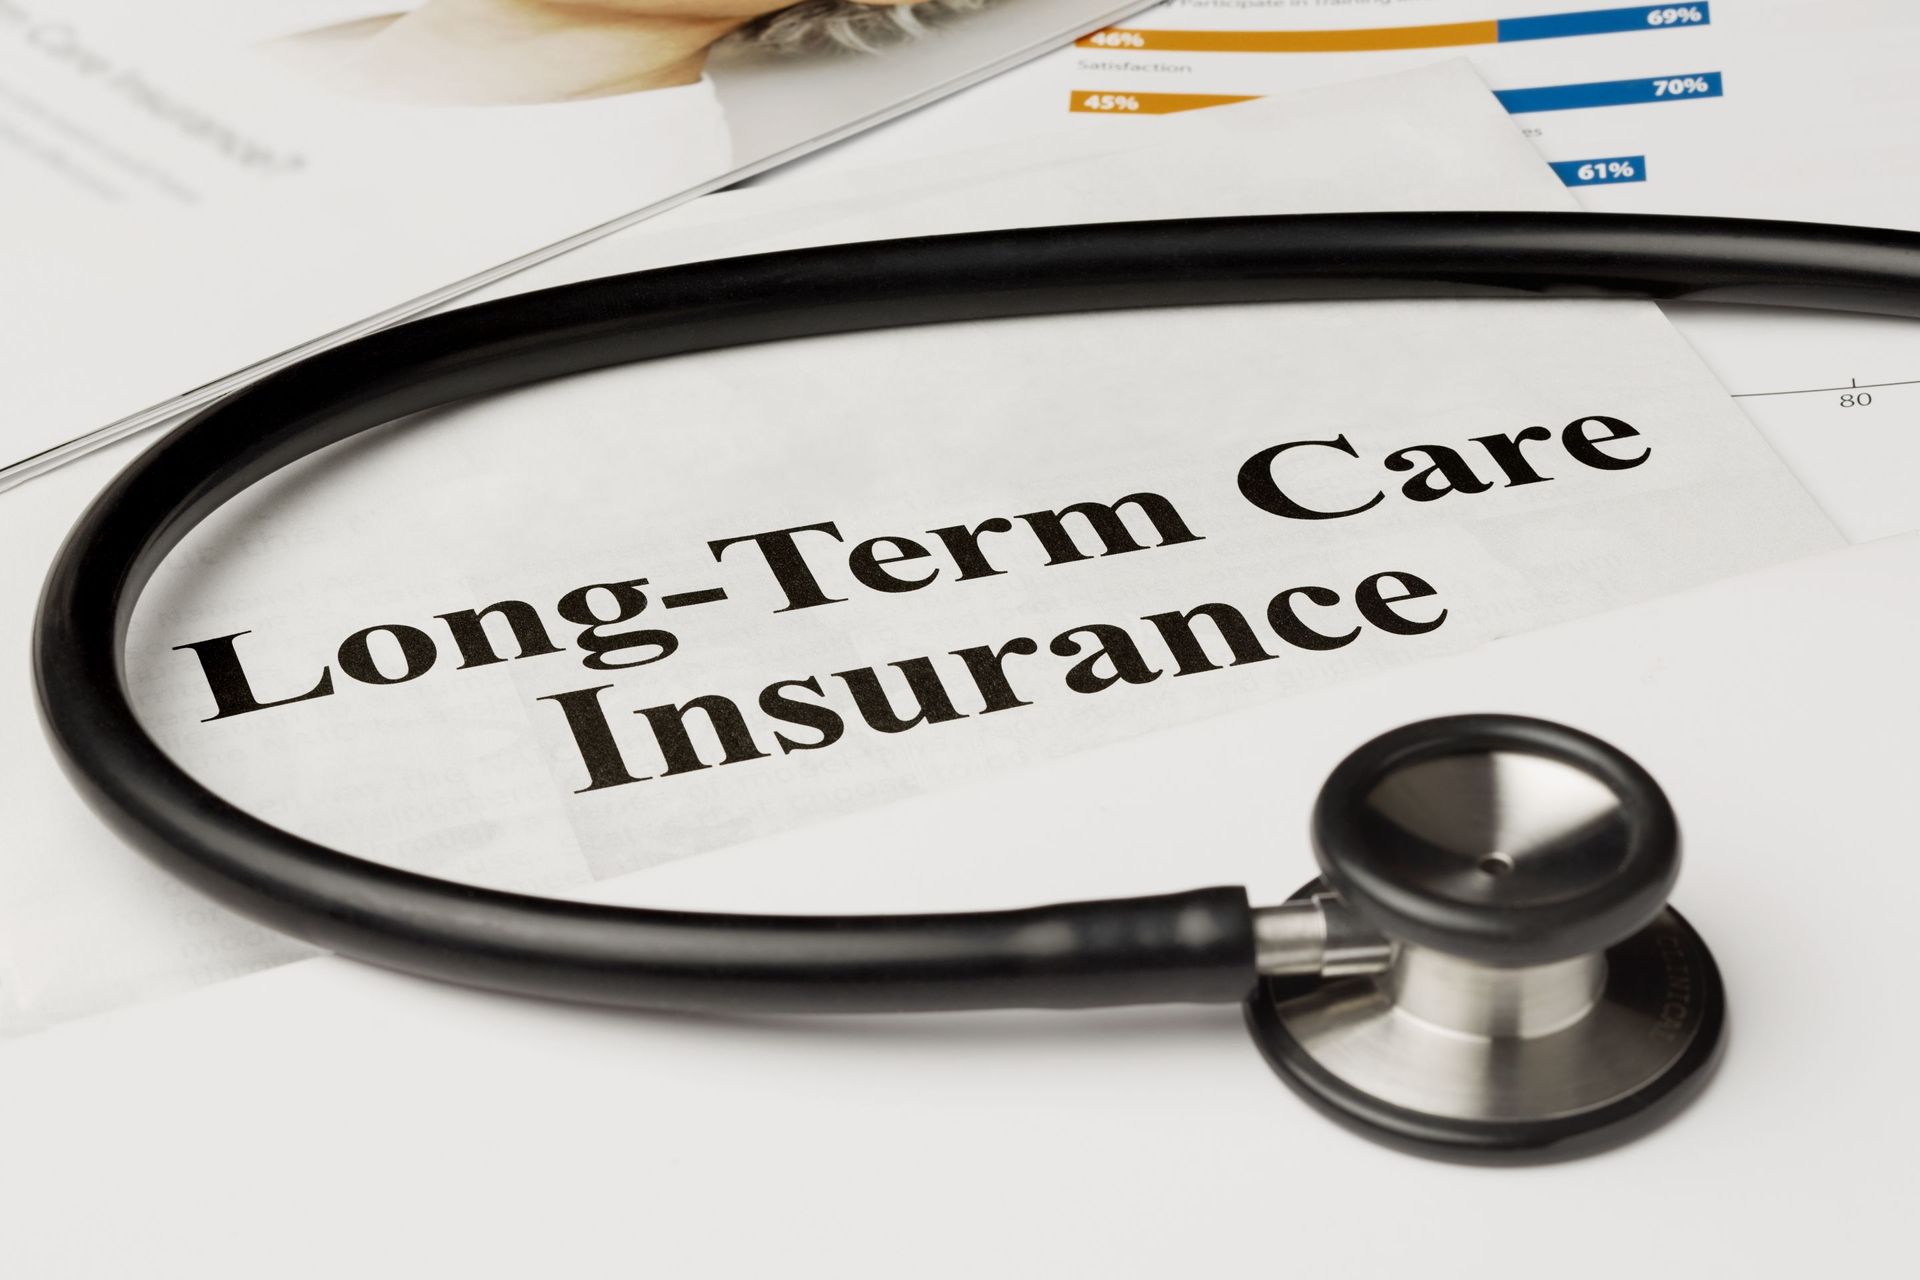 longterm care insurance information form stethoscope